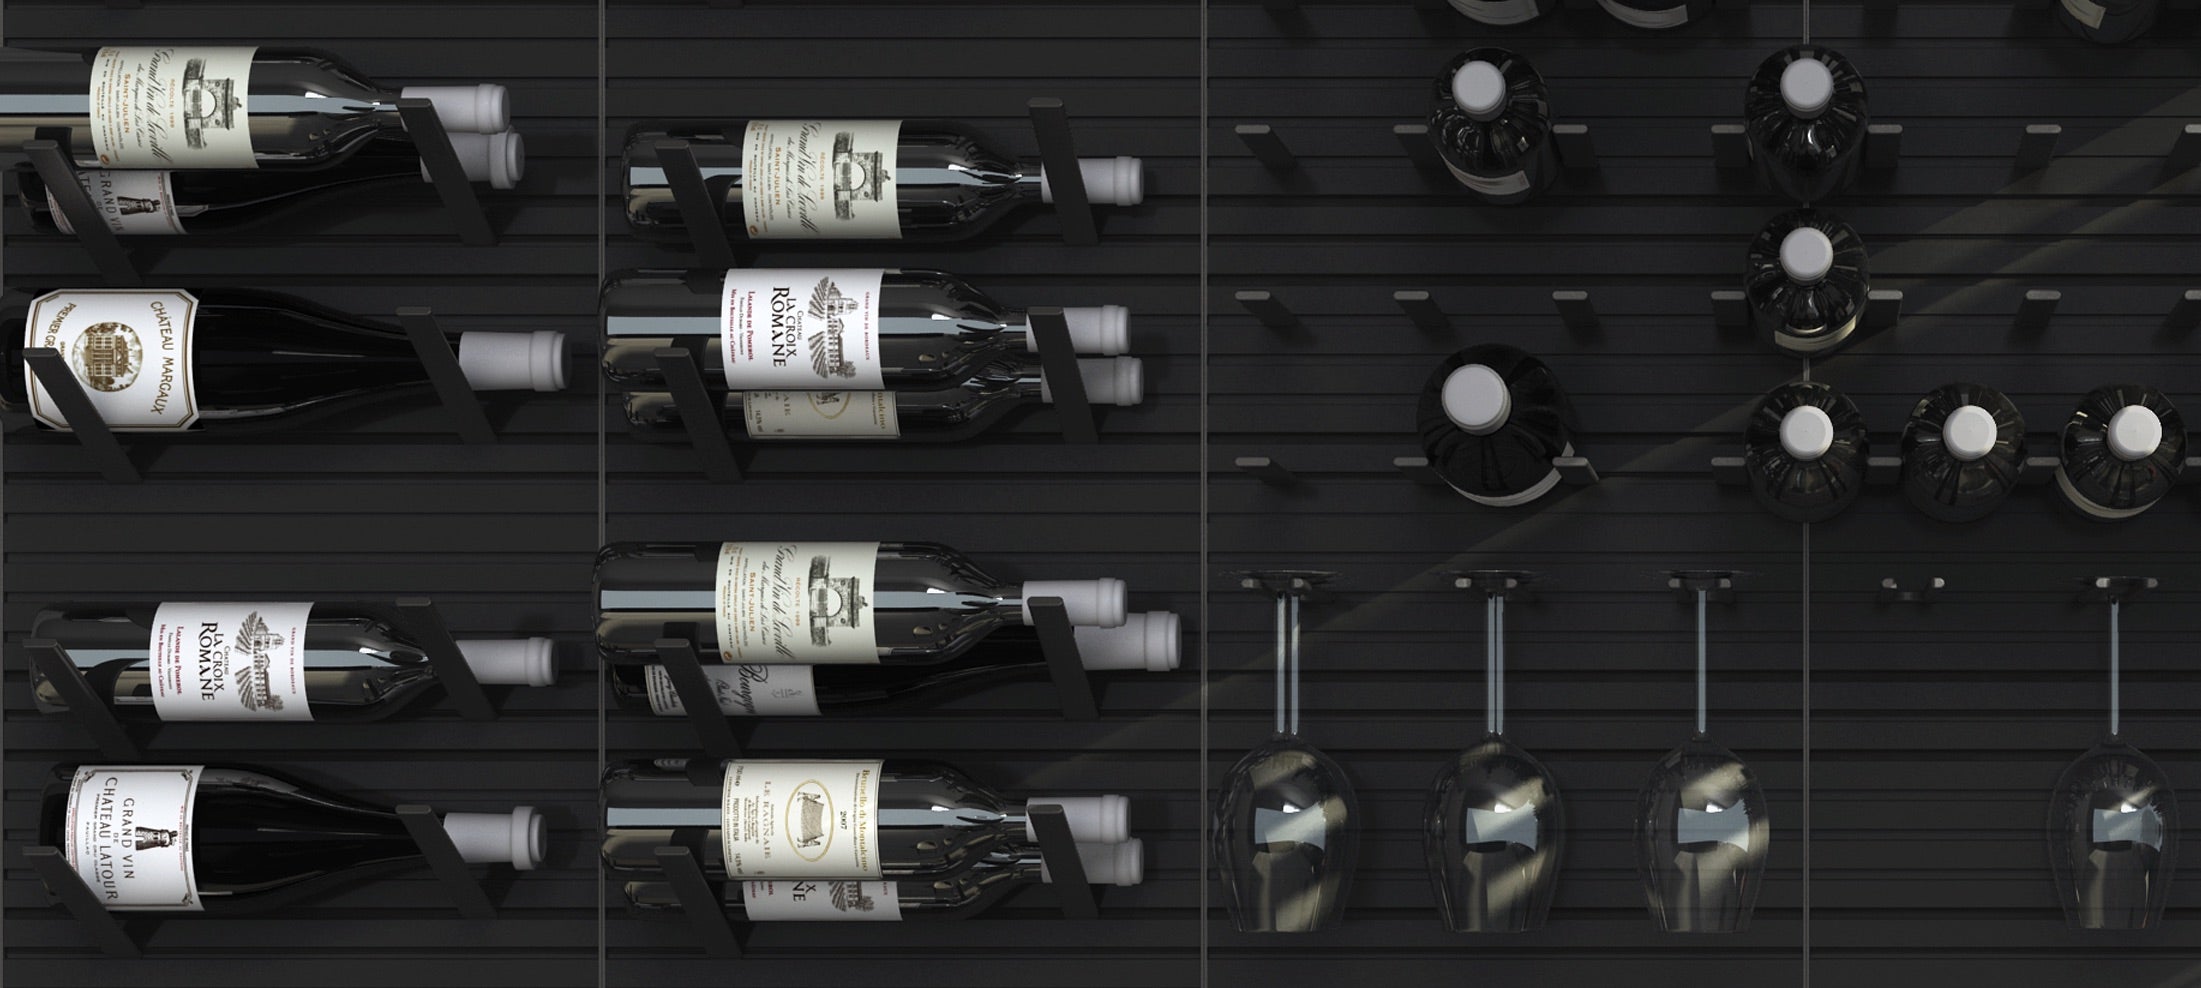 label-out metal peg wine racks